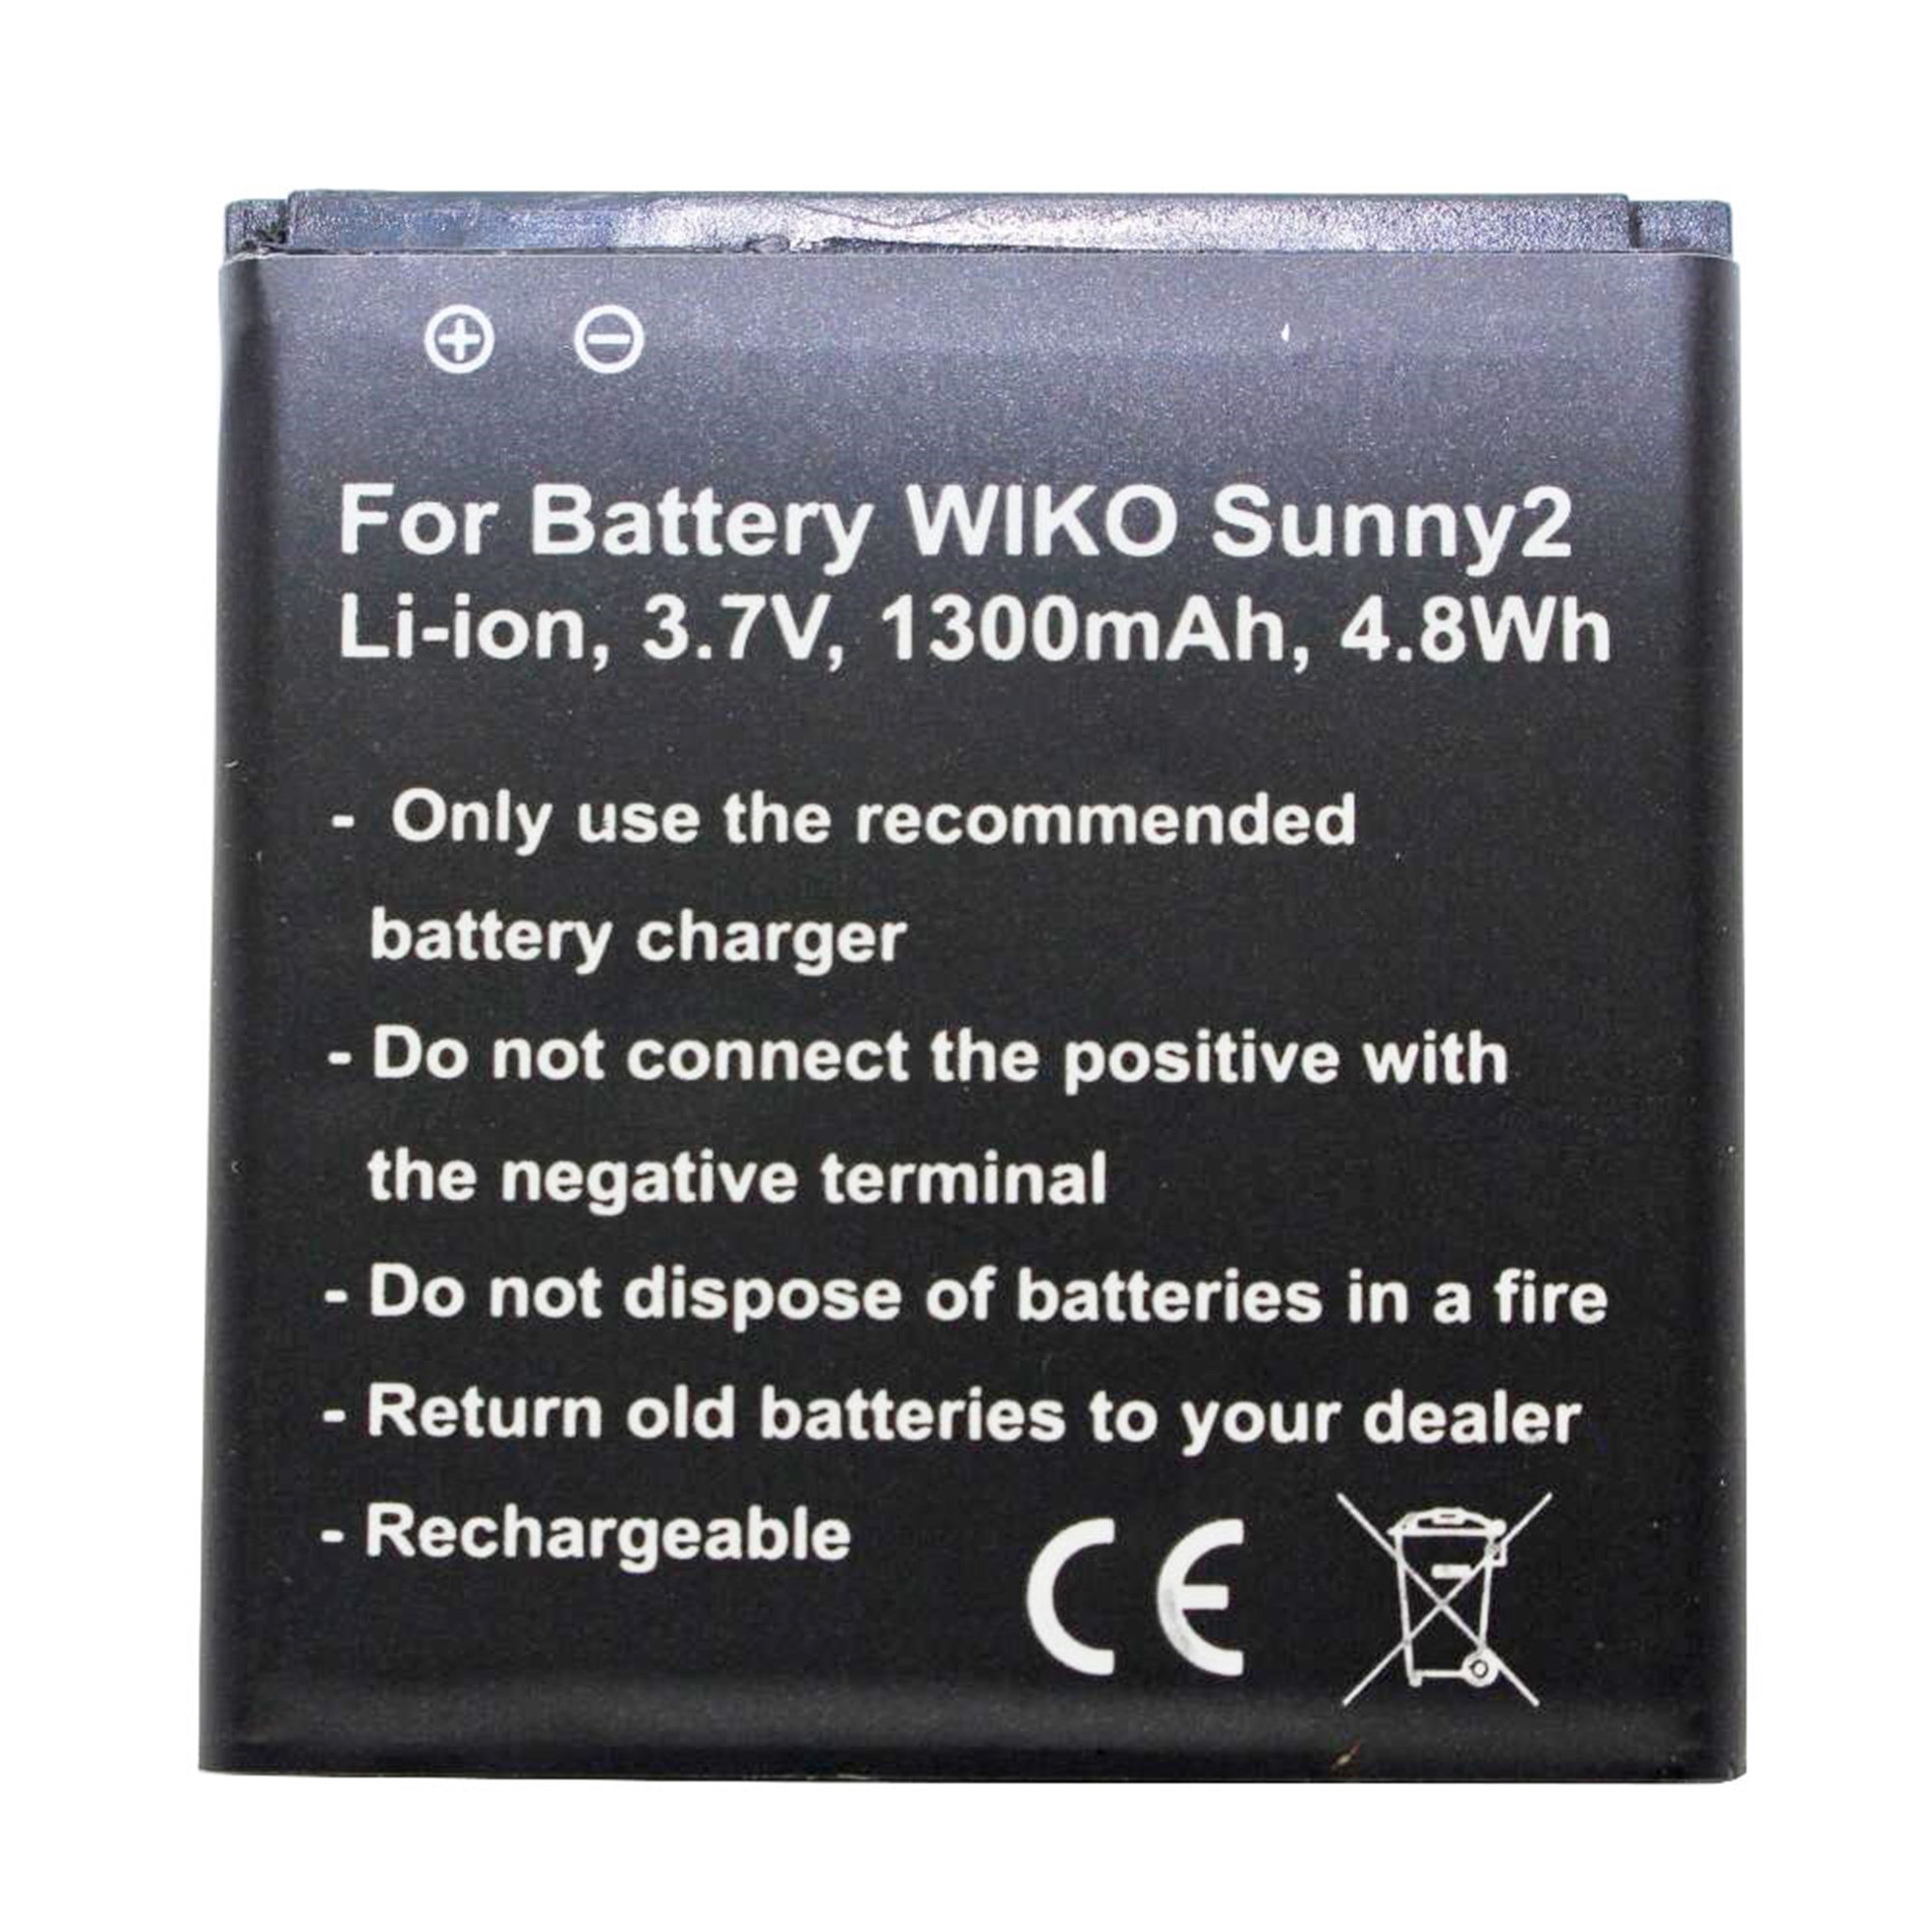 WIKO Sunny 2, Wiko 2510 3.7 volt 1300mAh lityum iyon pil için uygun pil